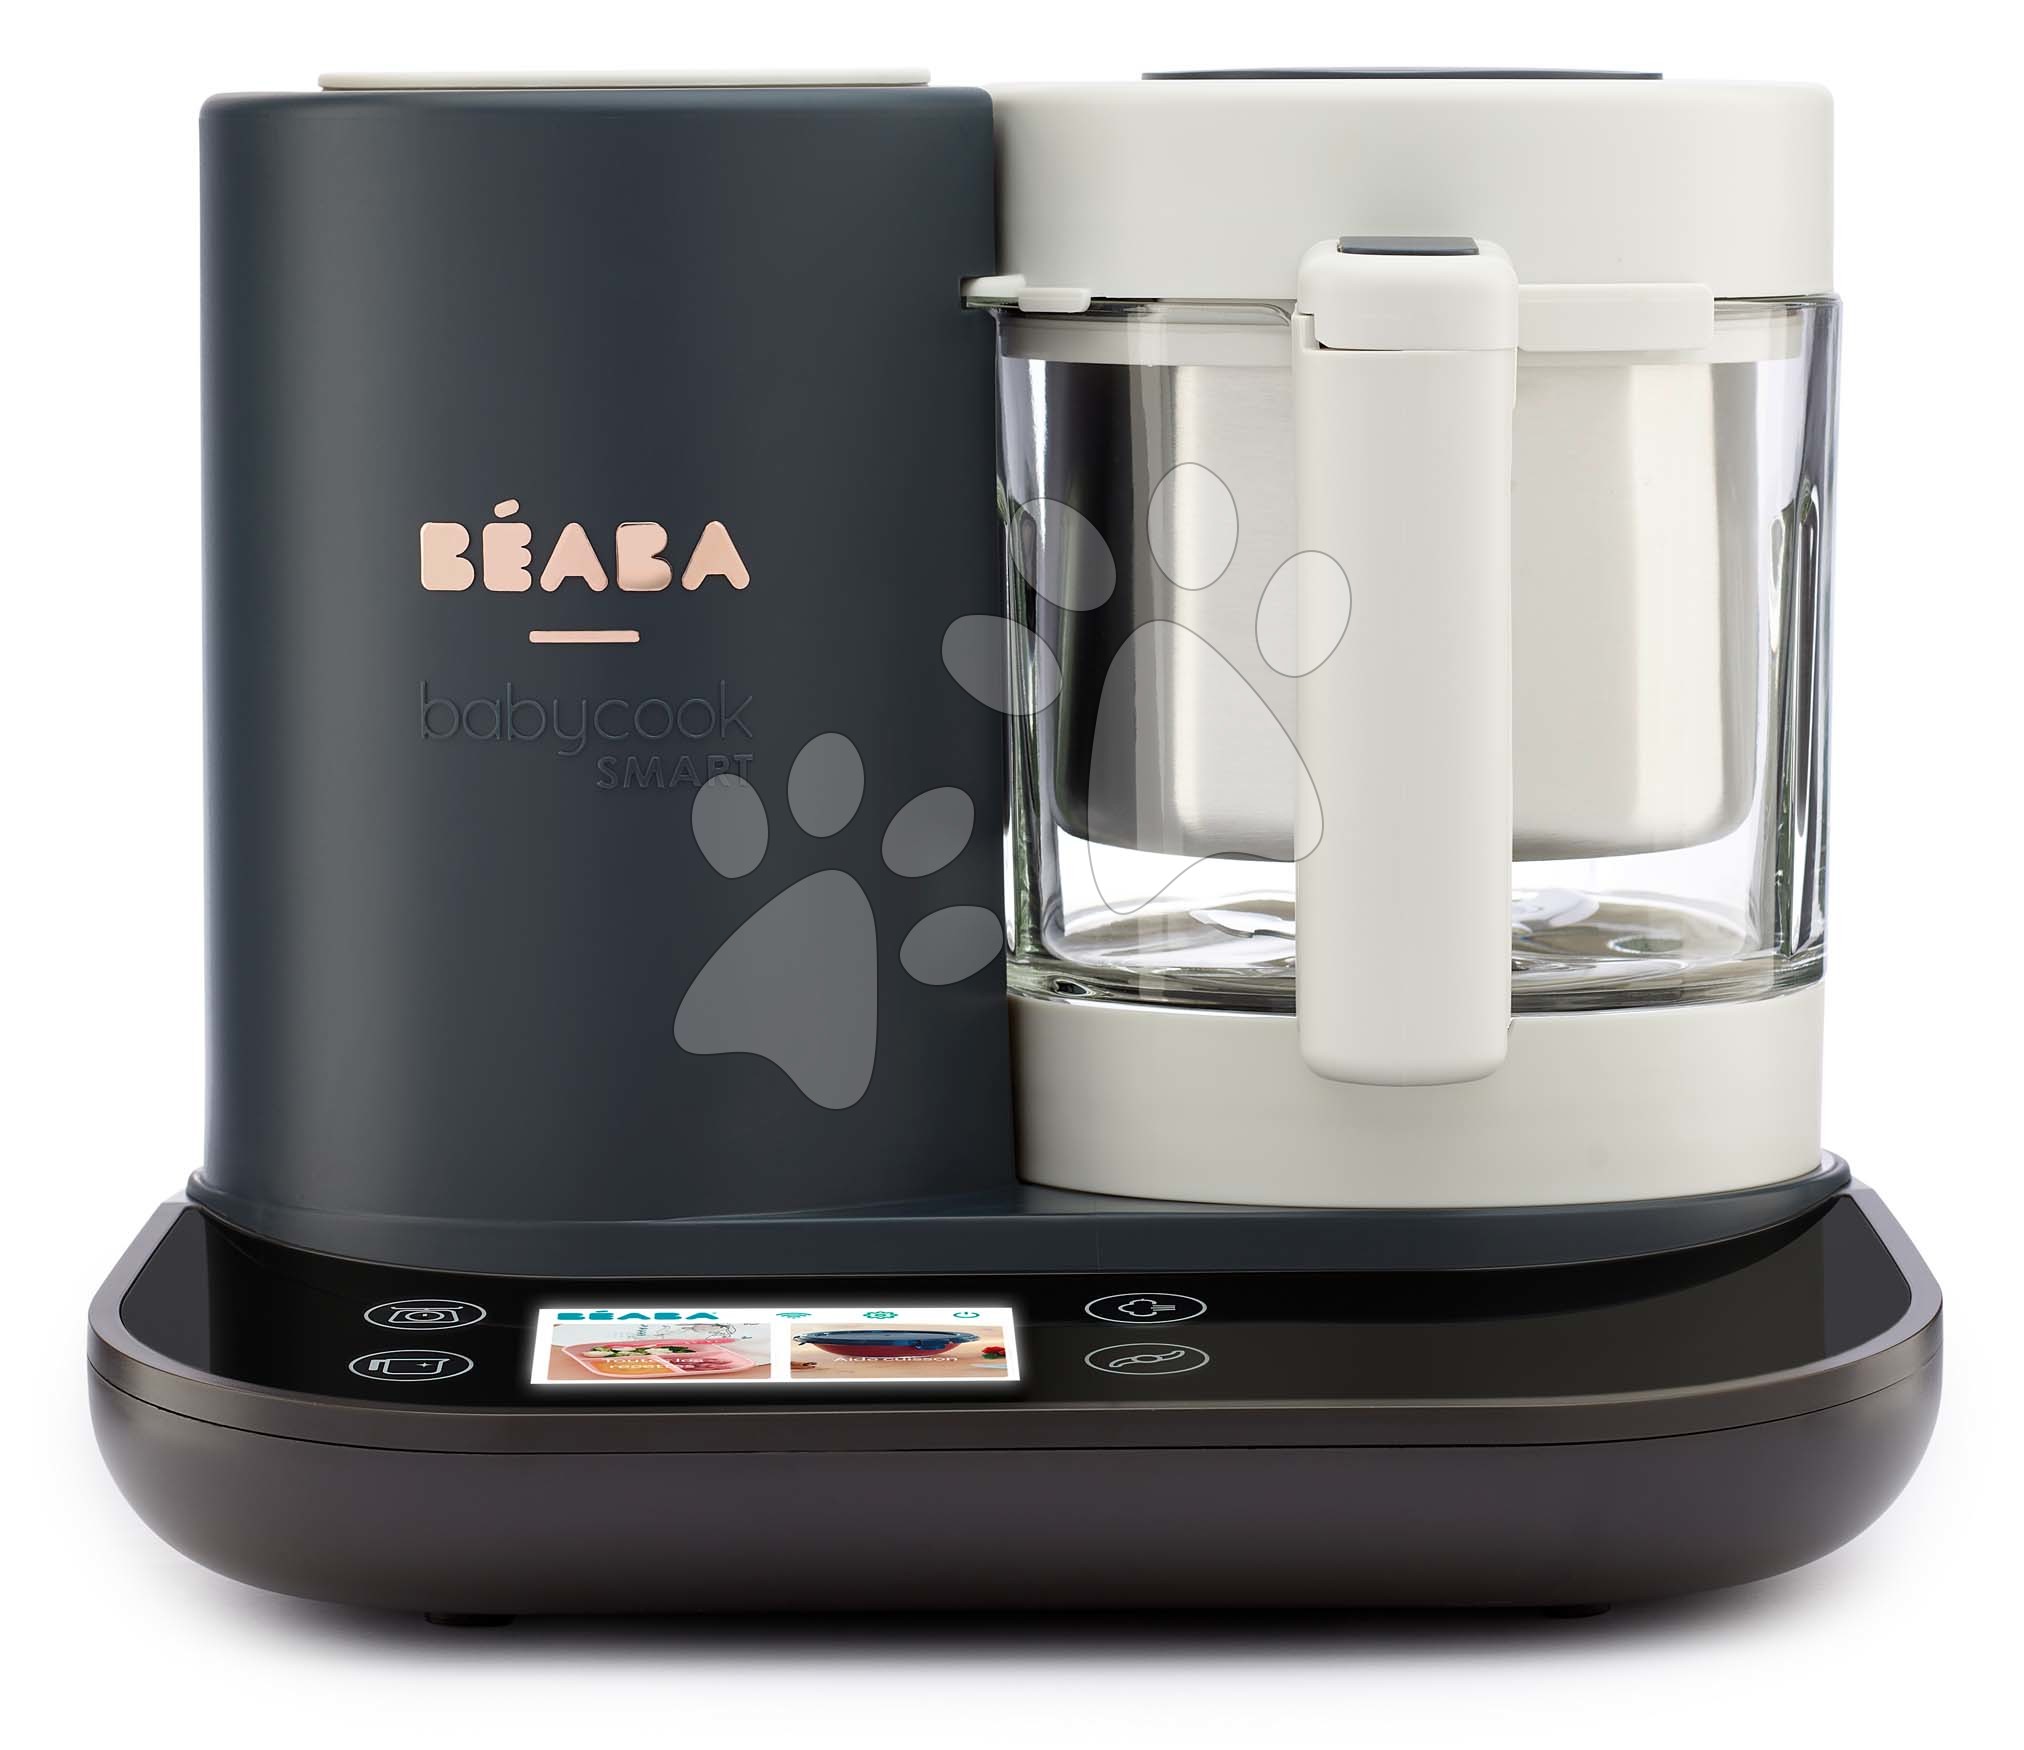 Parný hrniec s mixérom - Parný varič a mixér Beaba Babycook Smart® Charcoal Grey čierno-biely